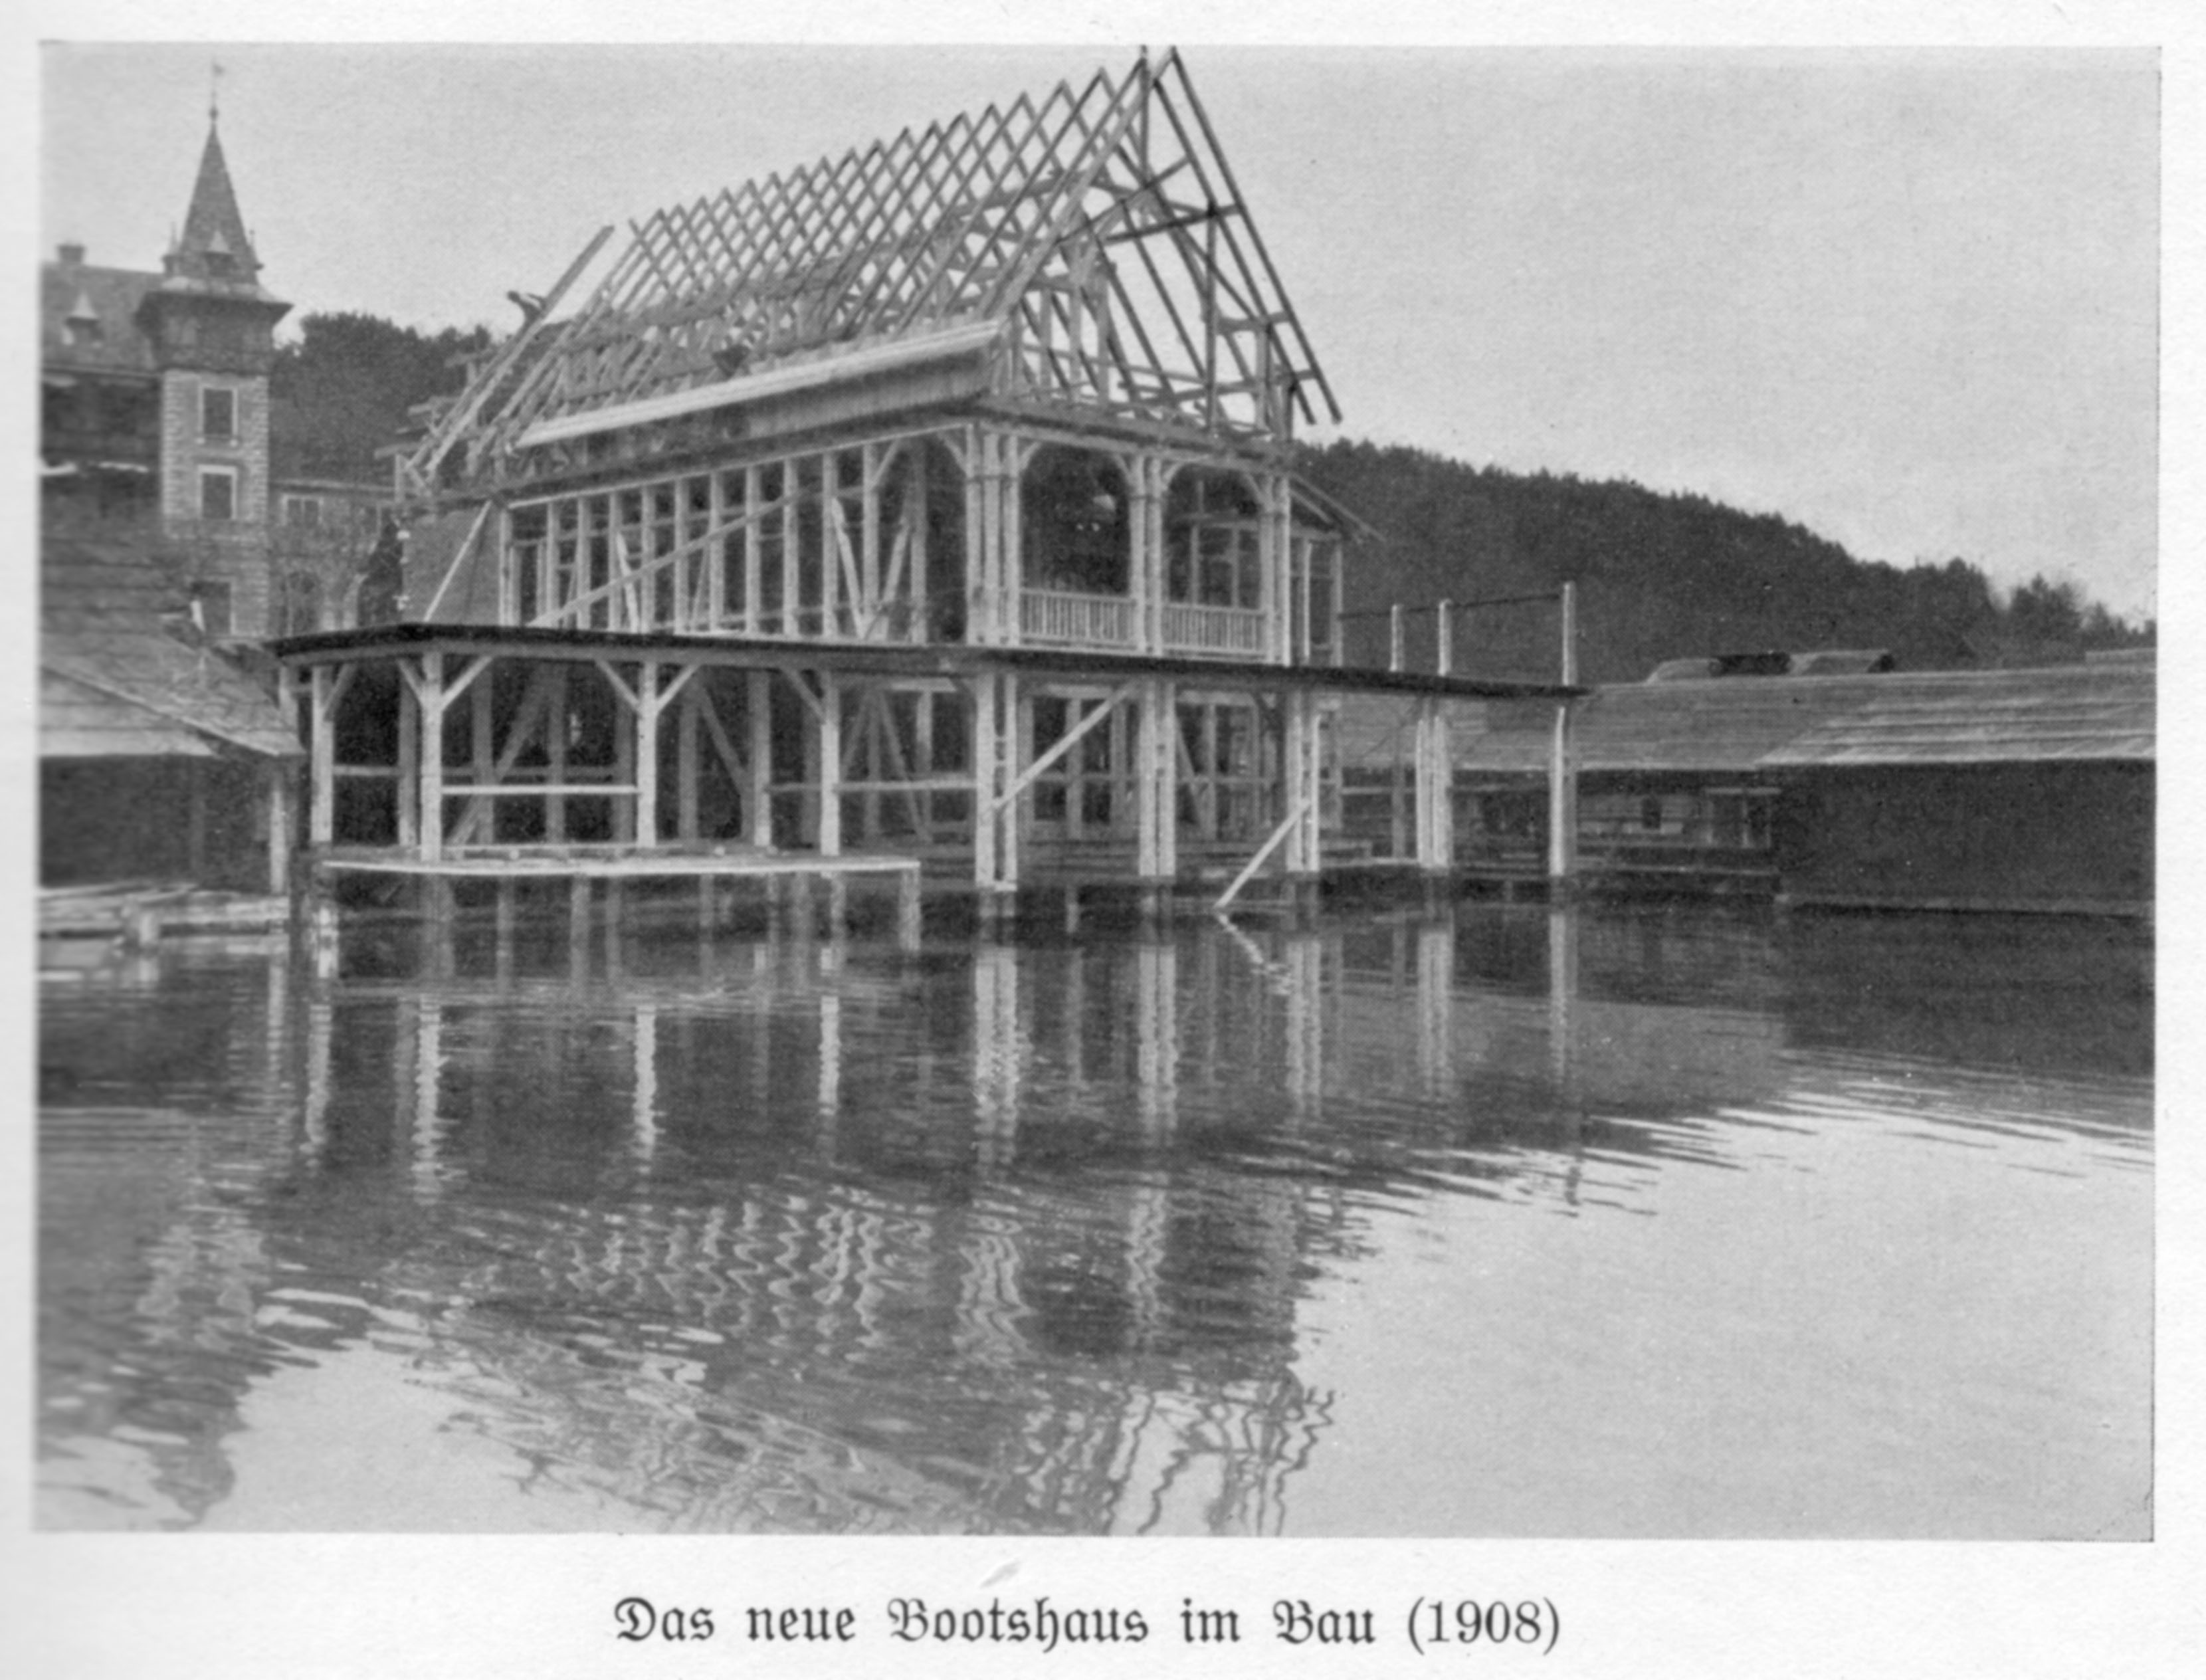 RV-Albatros | heutiges Bootshaus in Bau | 1908